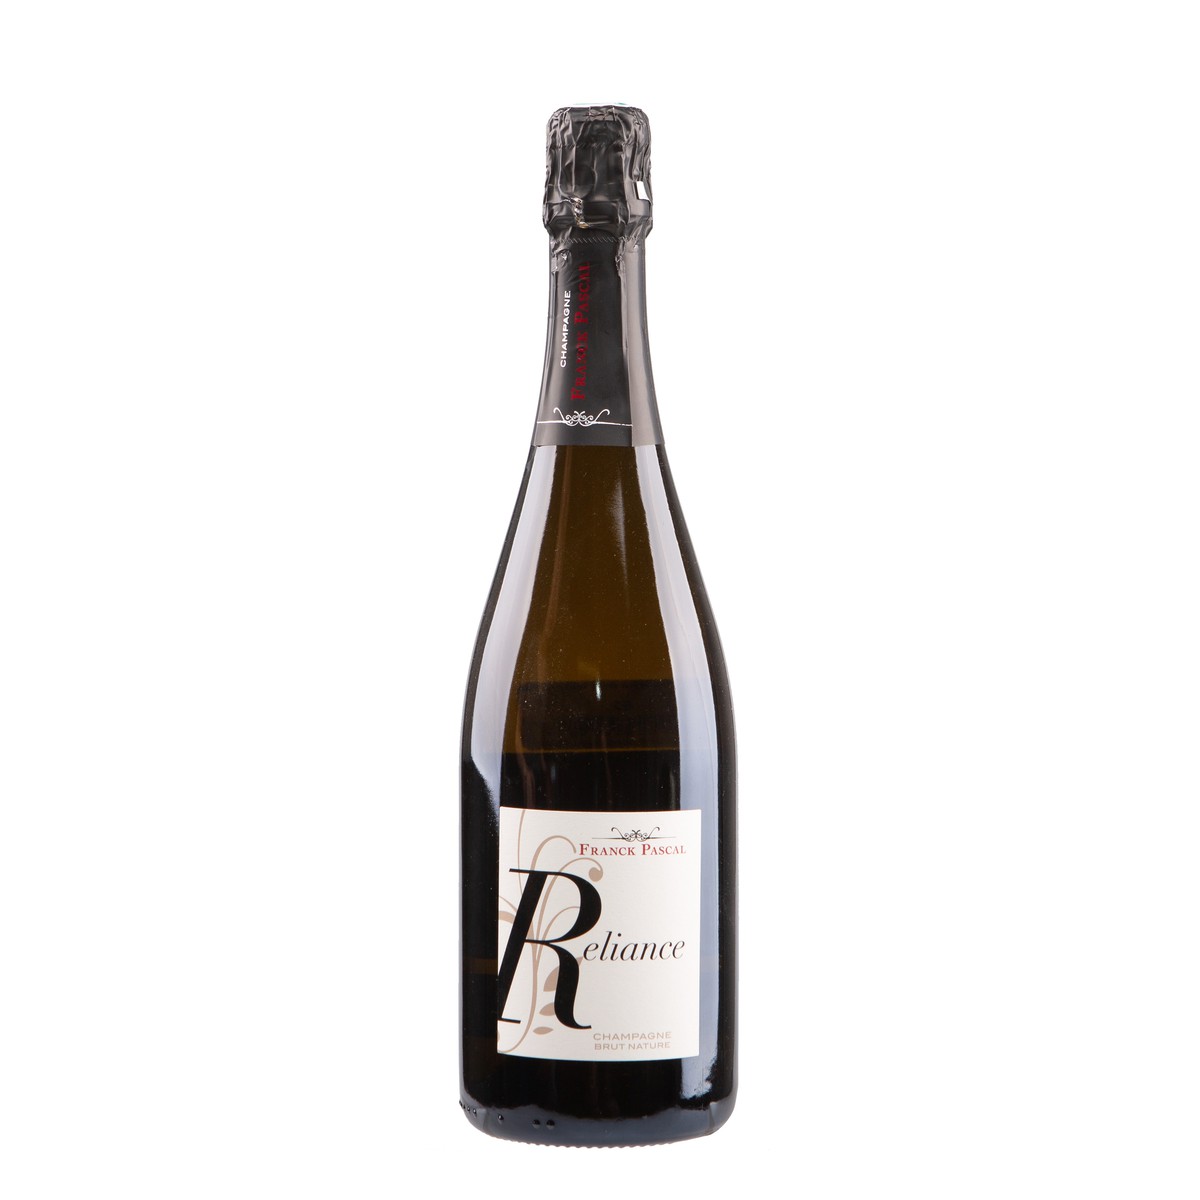   Champagne Brut Nature Reliance, Franck Pascal 75cl  0.75 L